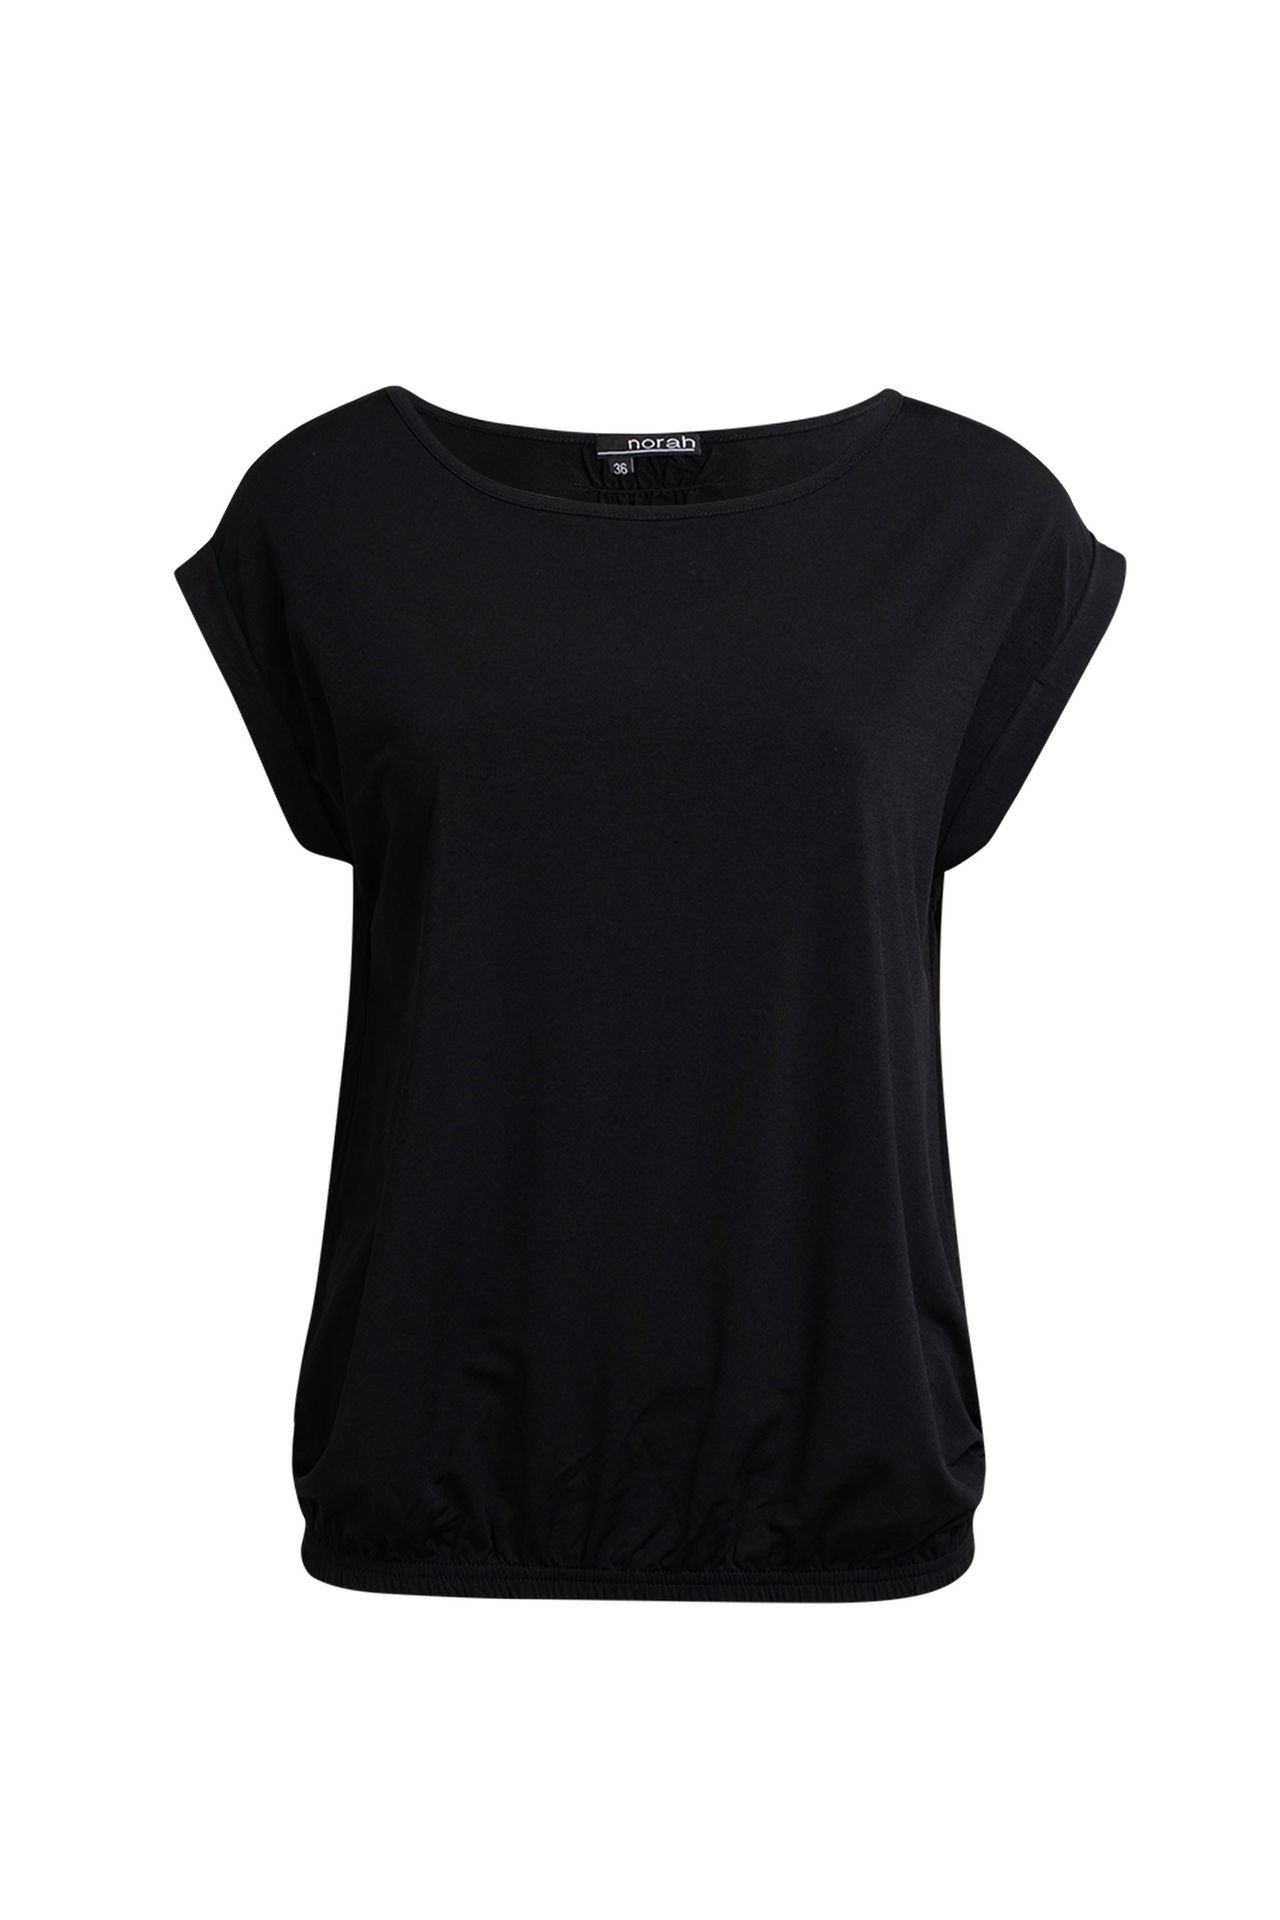 Norah Zwart shirt black 210284-001